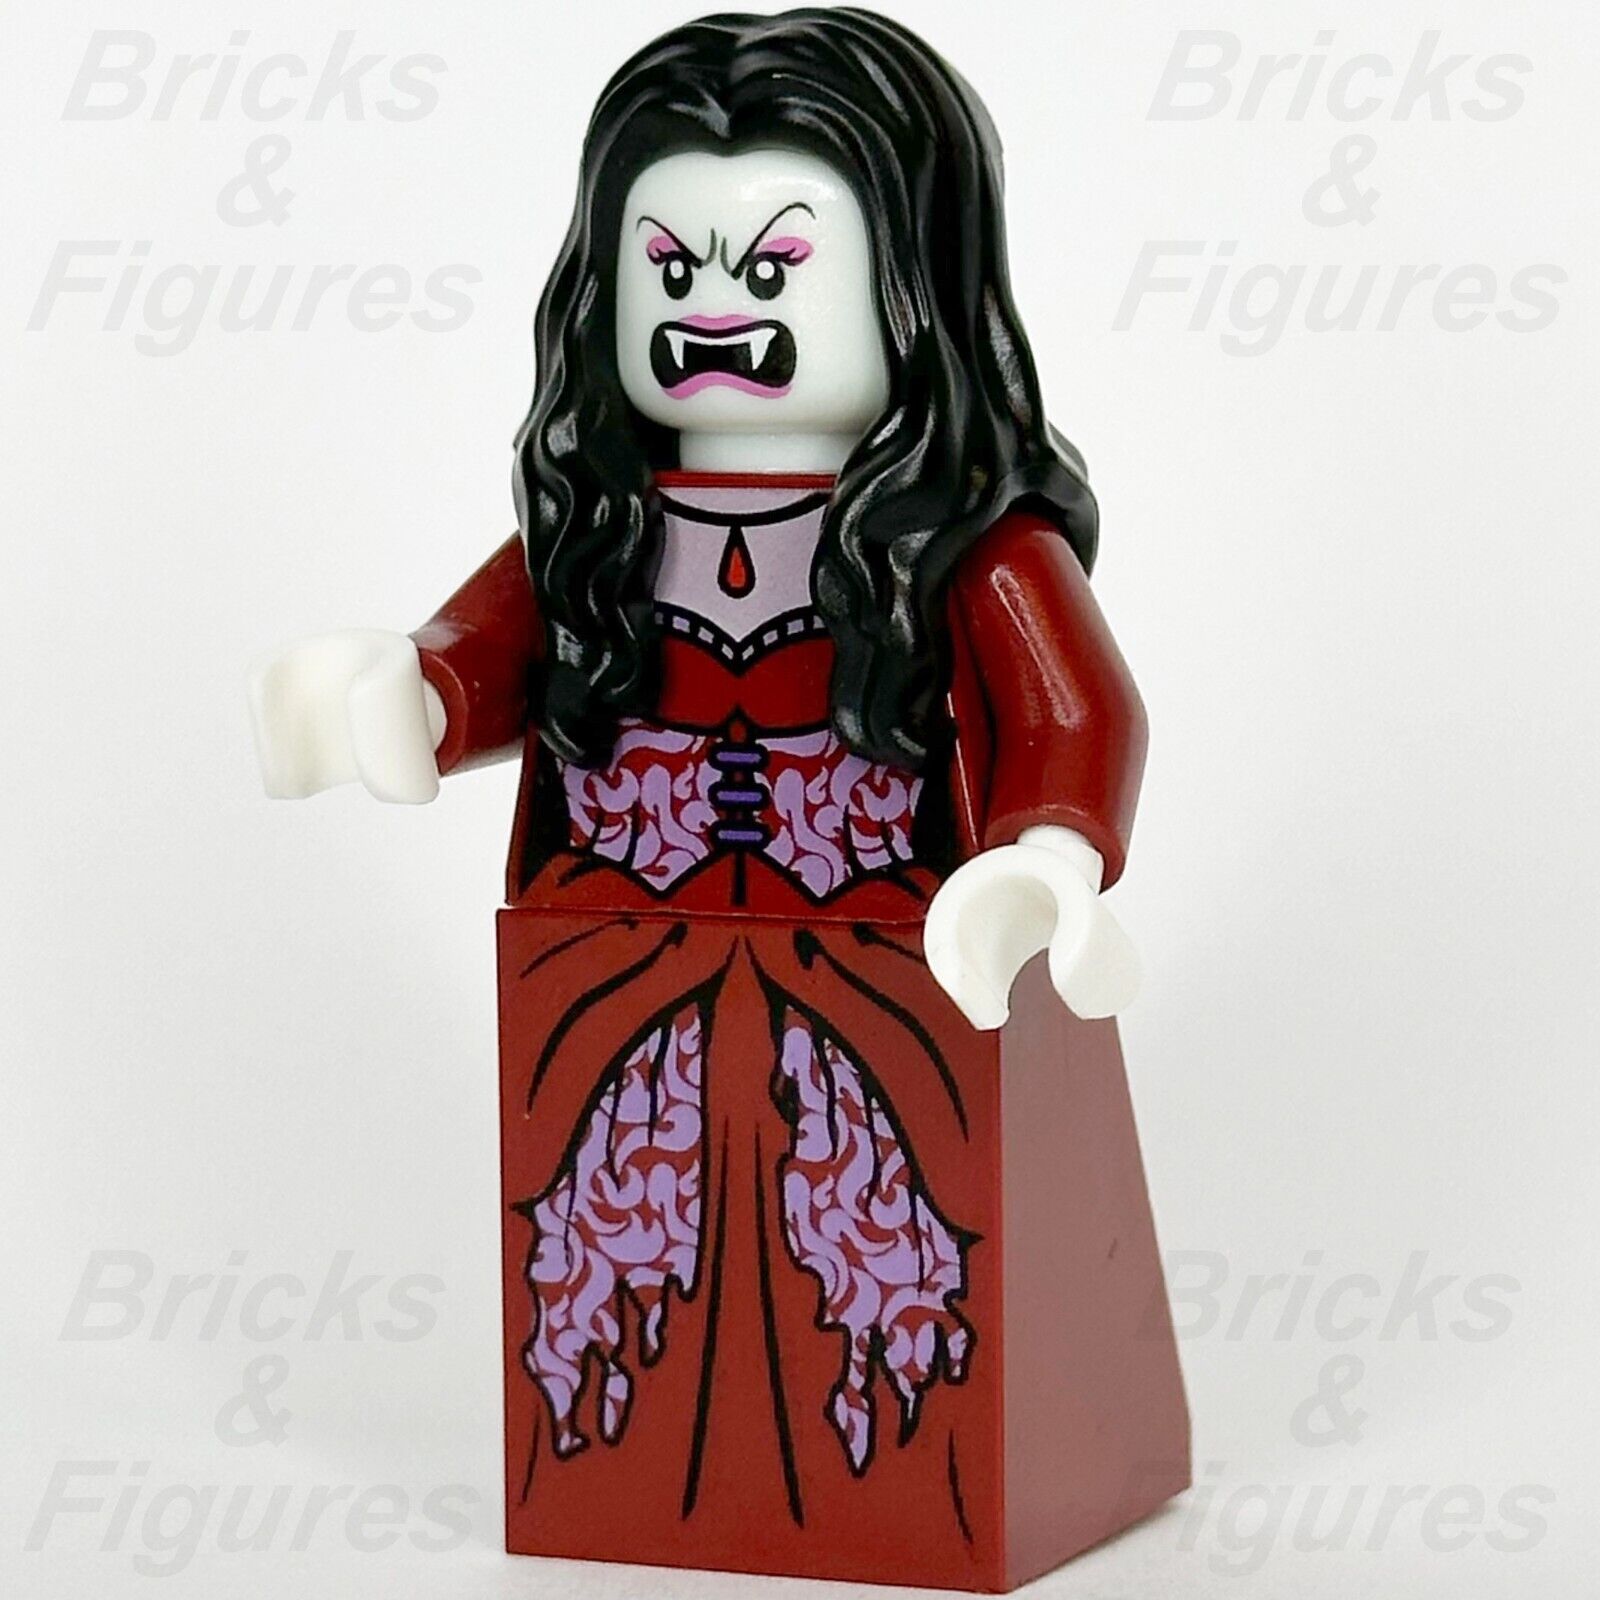 LEGO Monster Fighters Lord Vampyre's Bride Minifigure Vampire 9468 10228 mof008